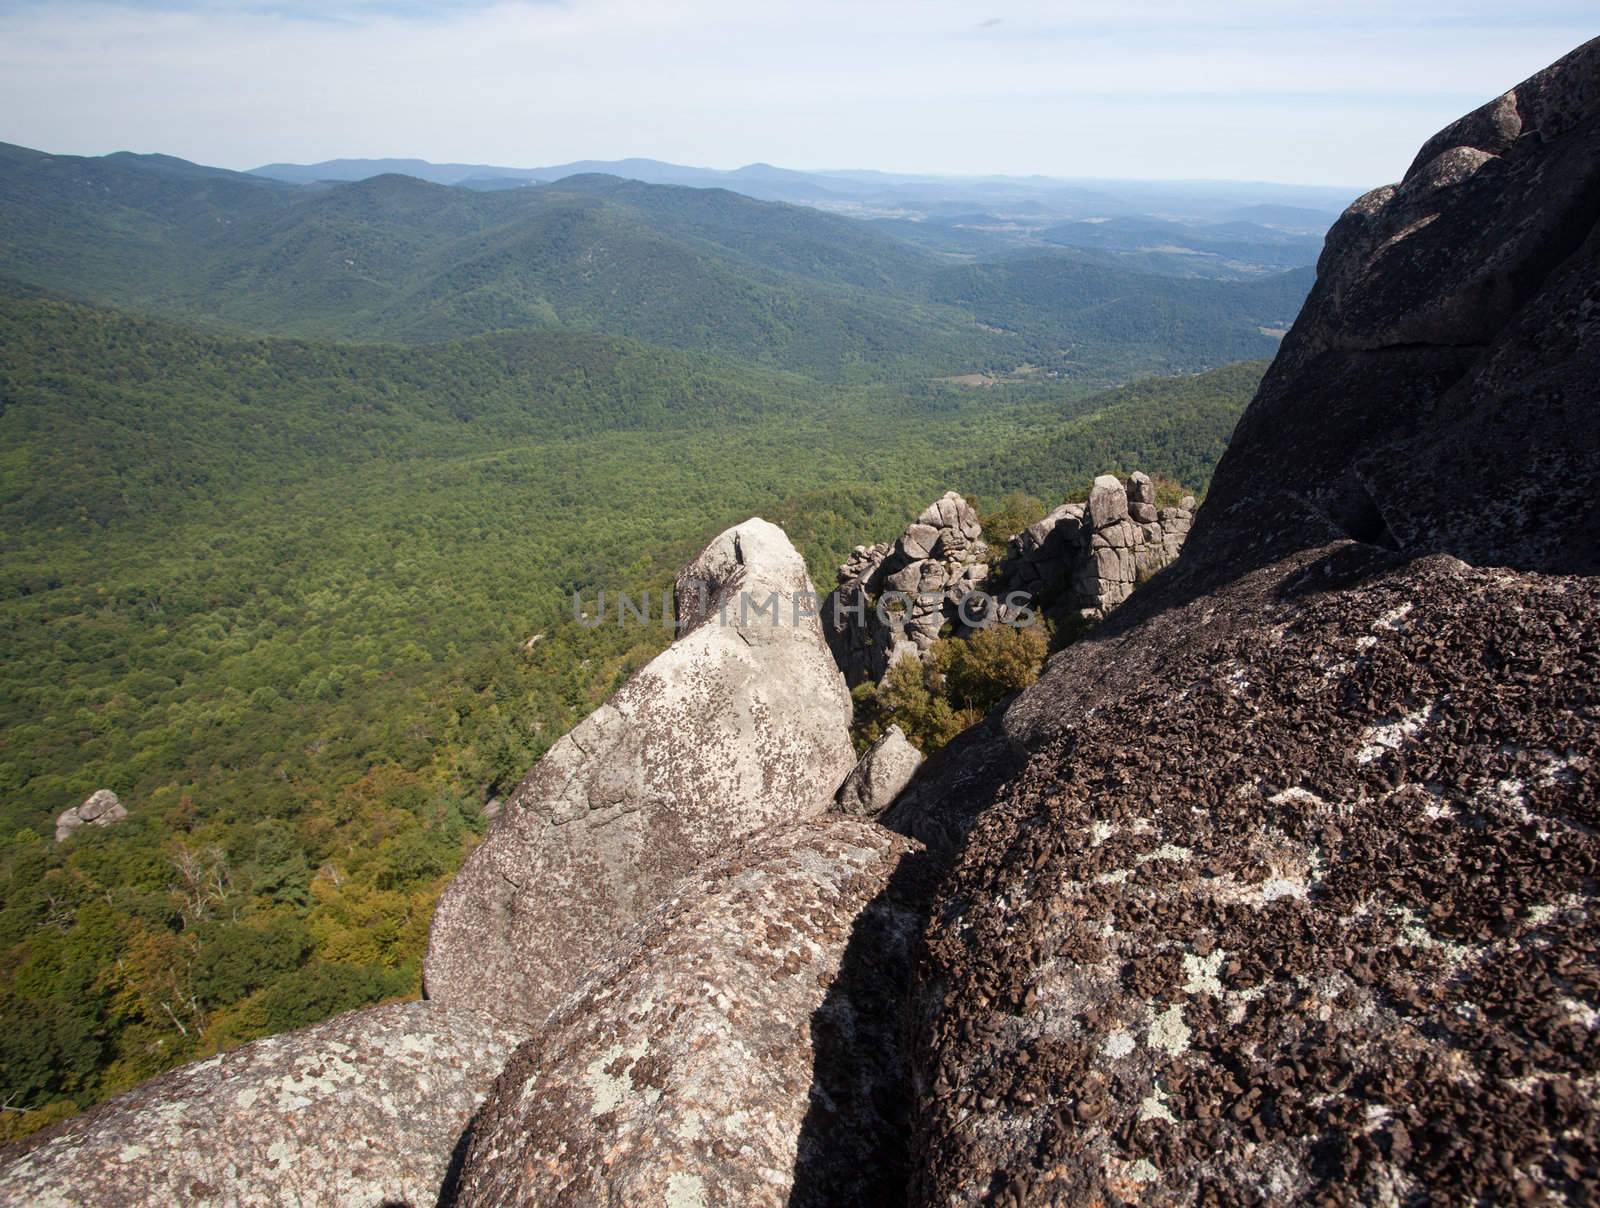 Shenandoah valley by rock outcrop by steheap